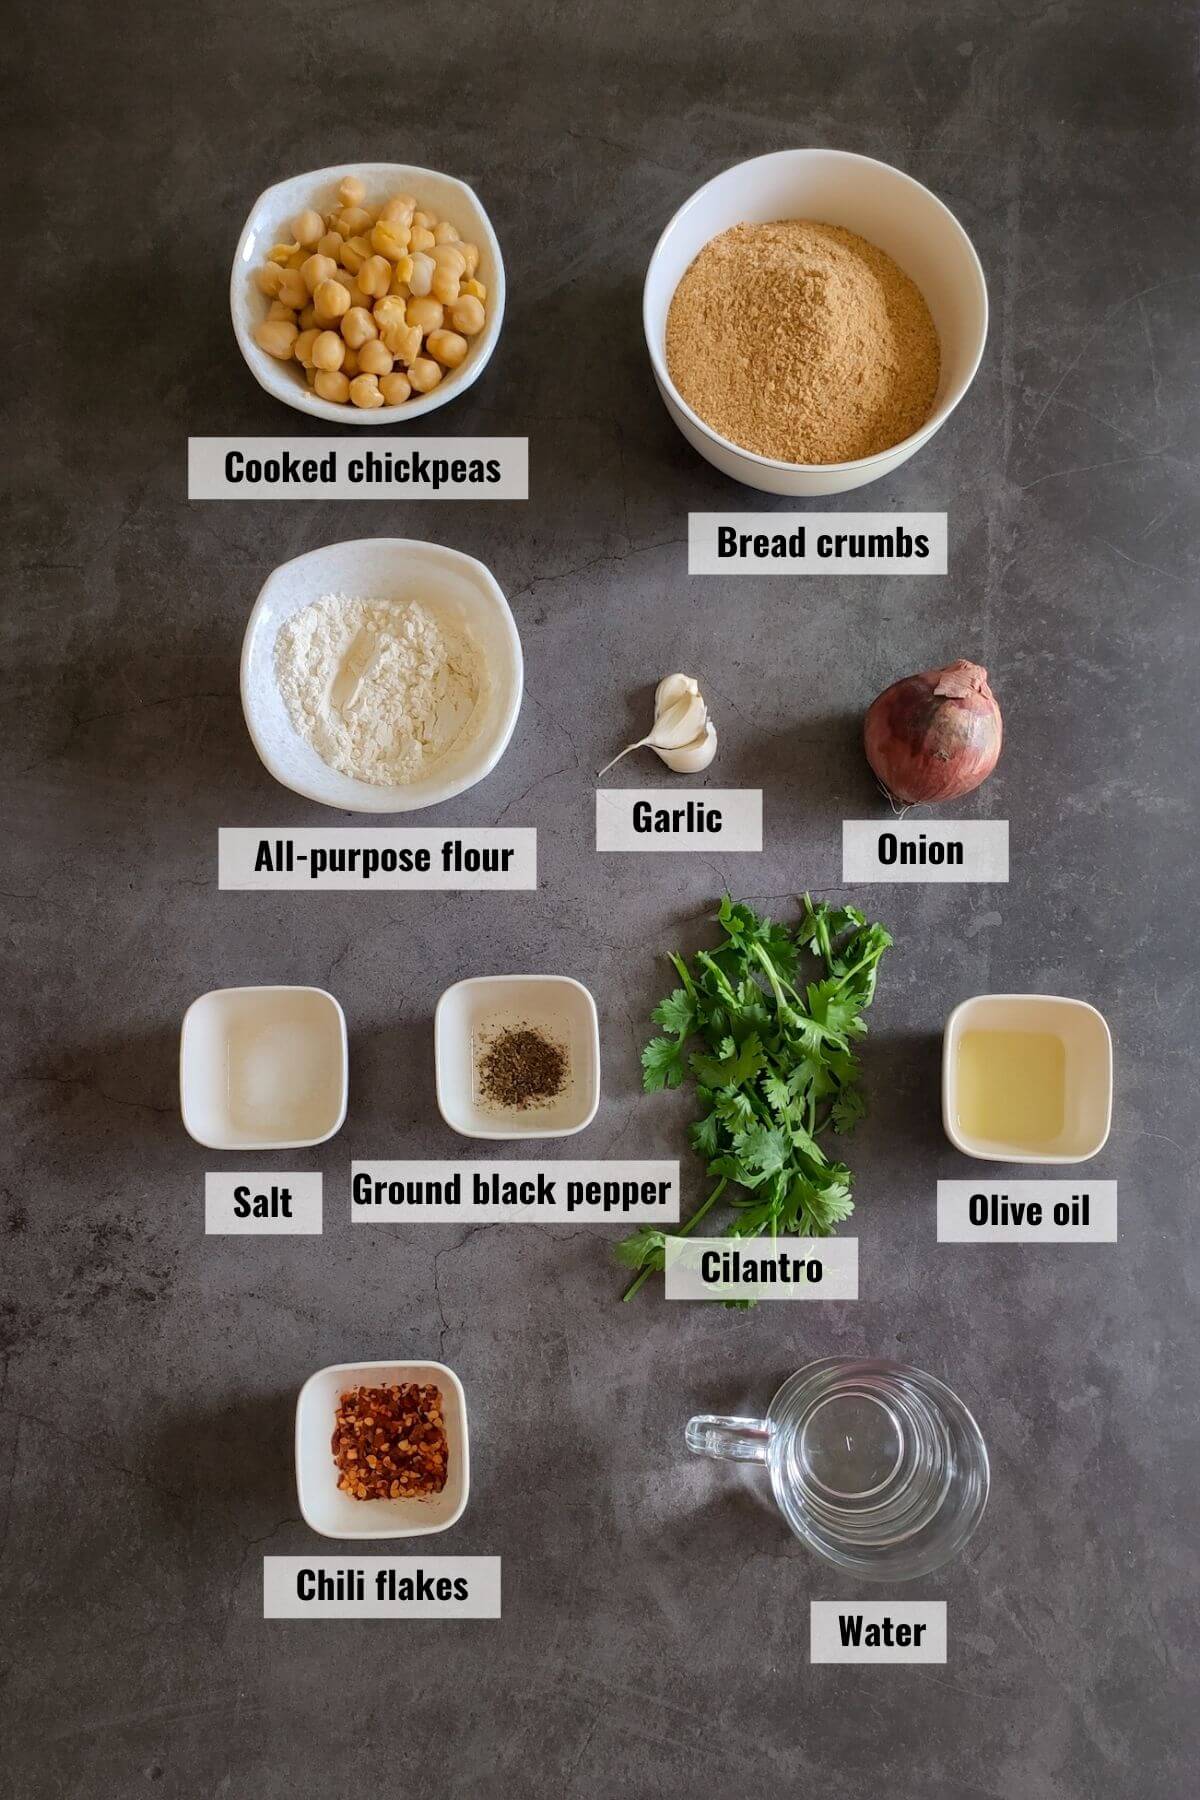 Ingredients for vegan chickpea cutlet labelled.